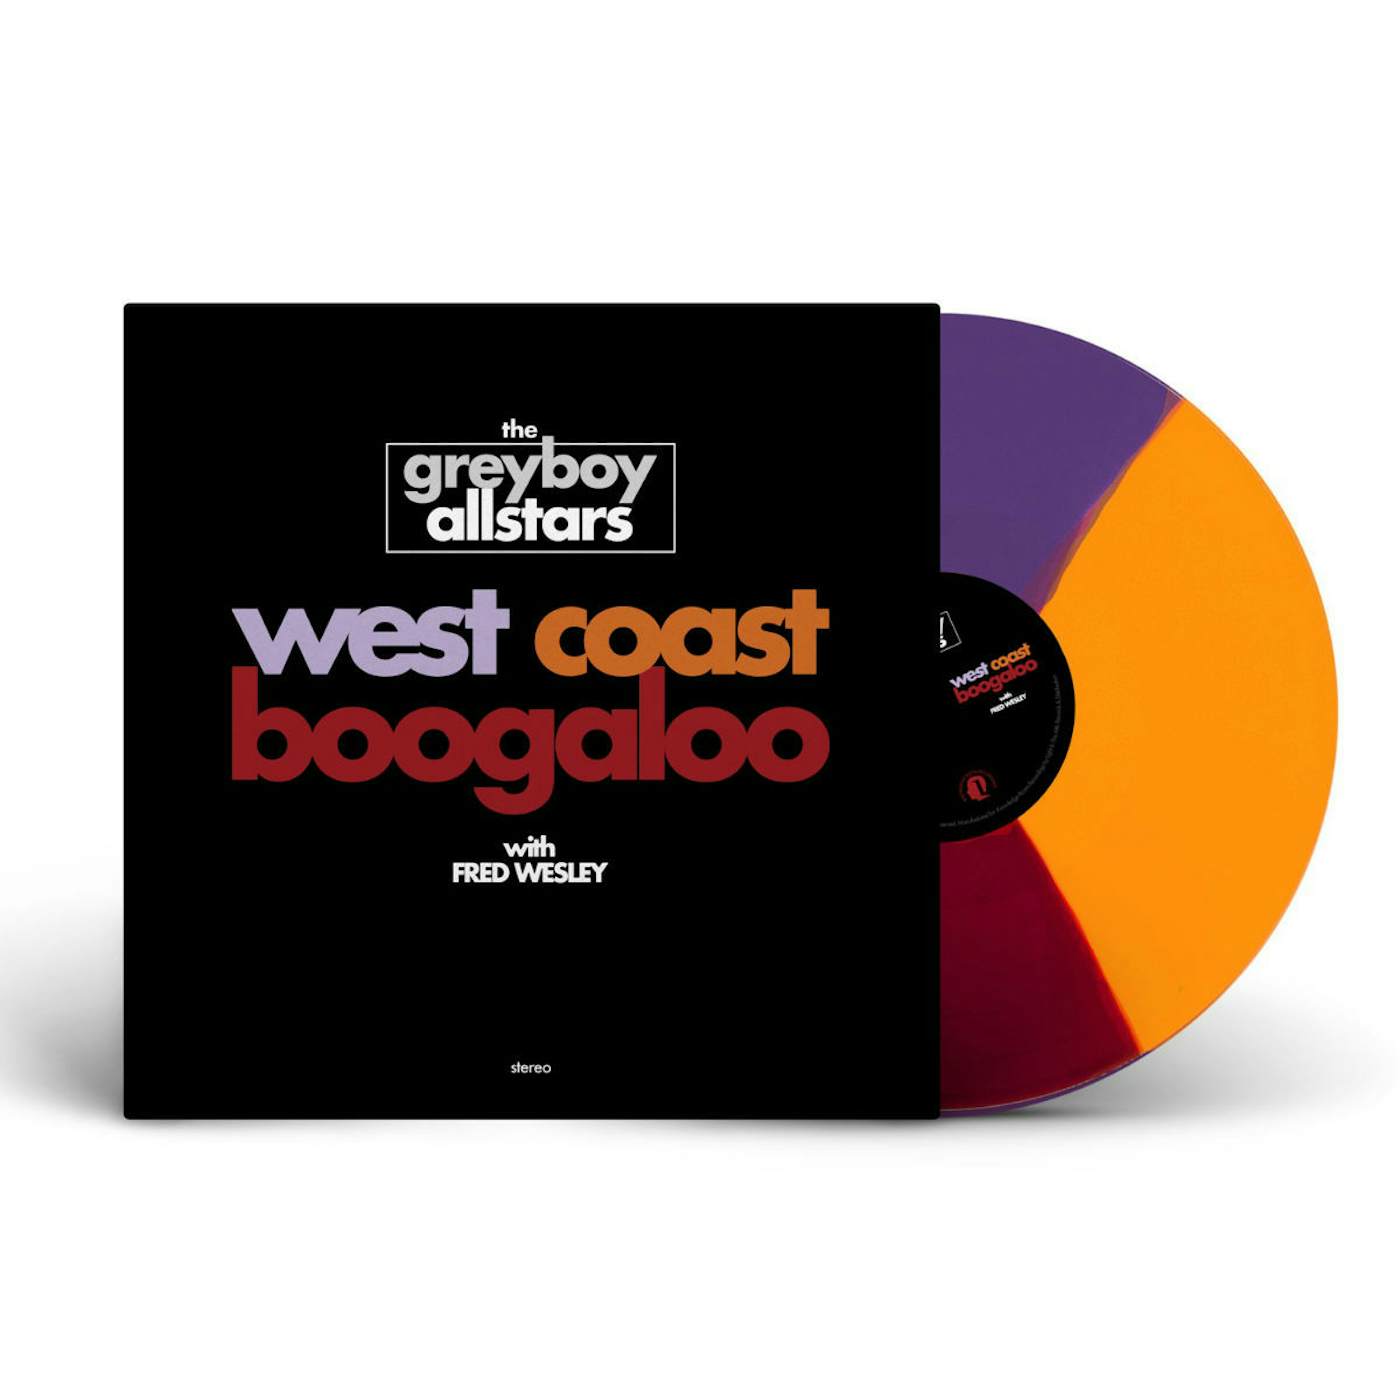 The Greyboy Allstars West Coast Boogaloo Vinyl (Purple/Maroon/Orange)